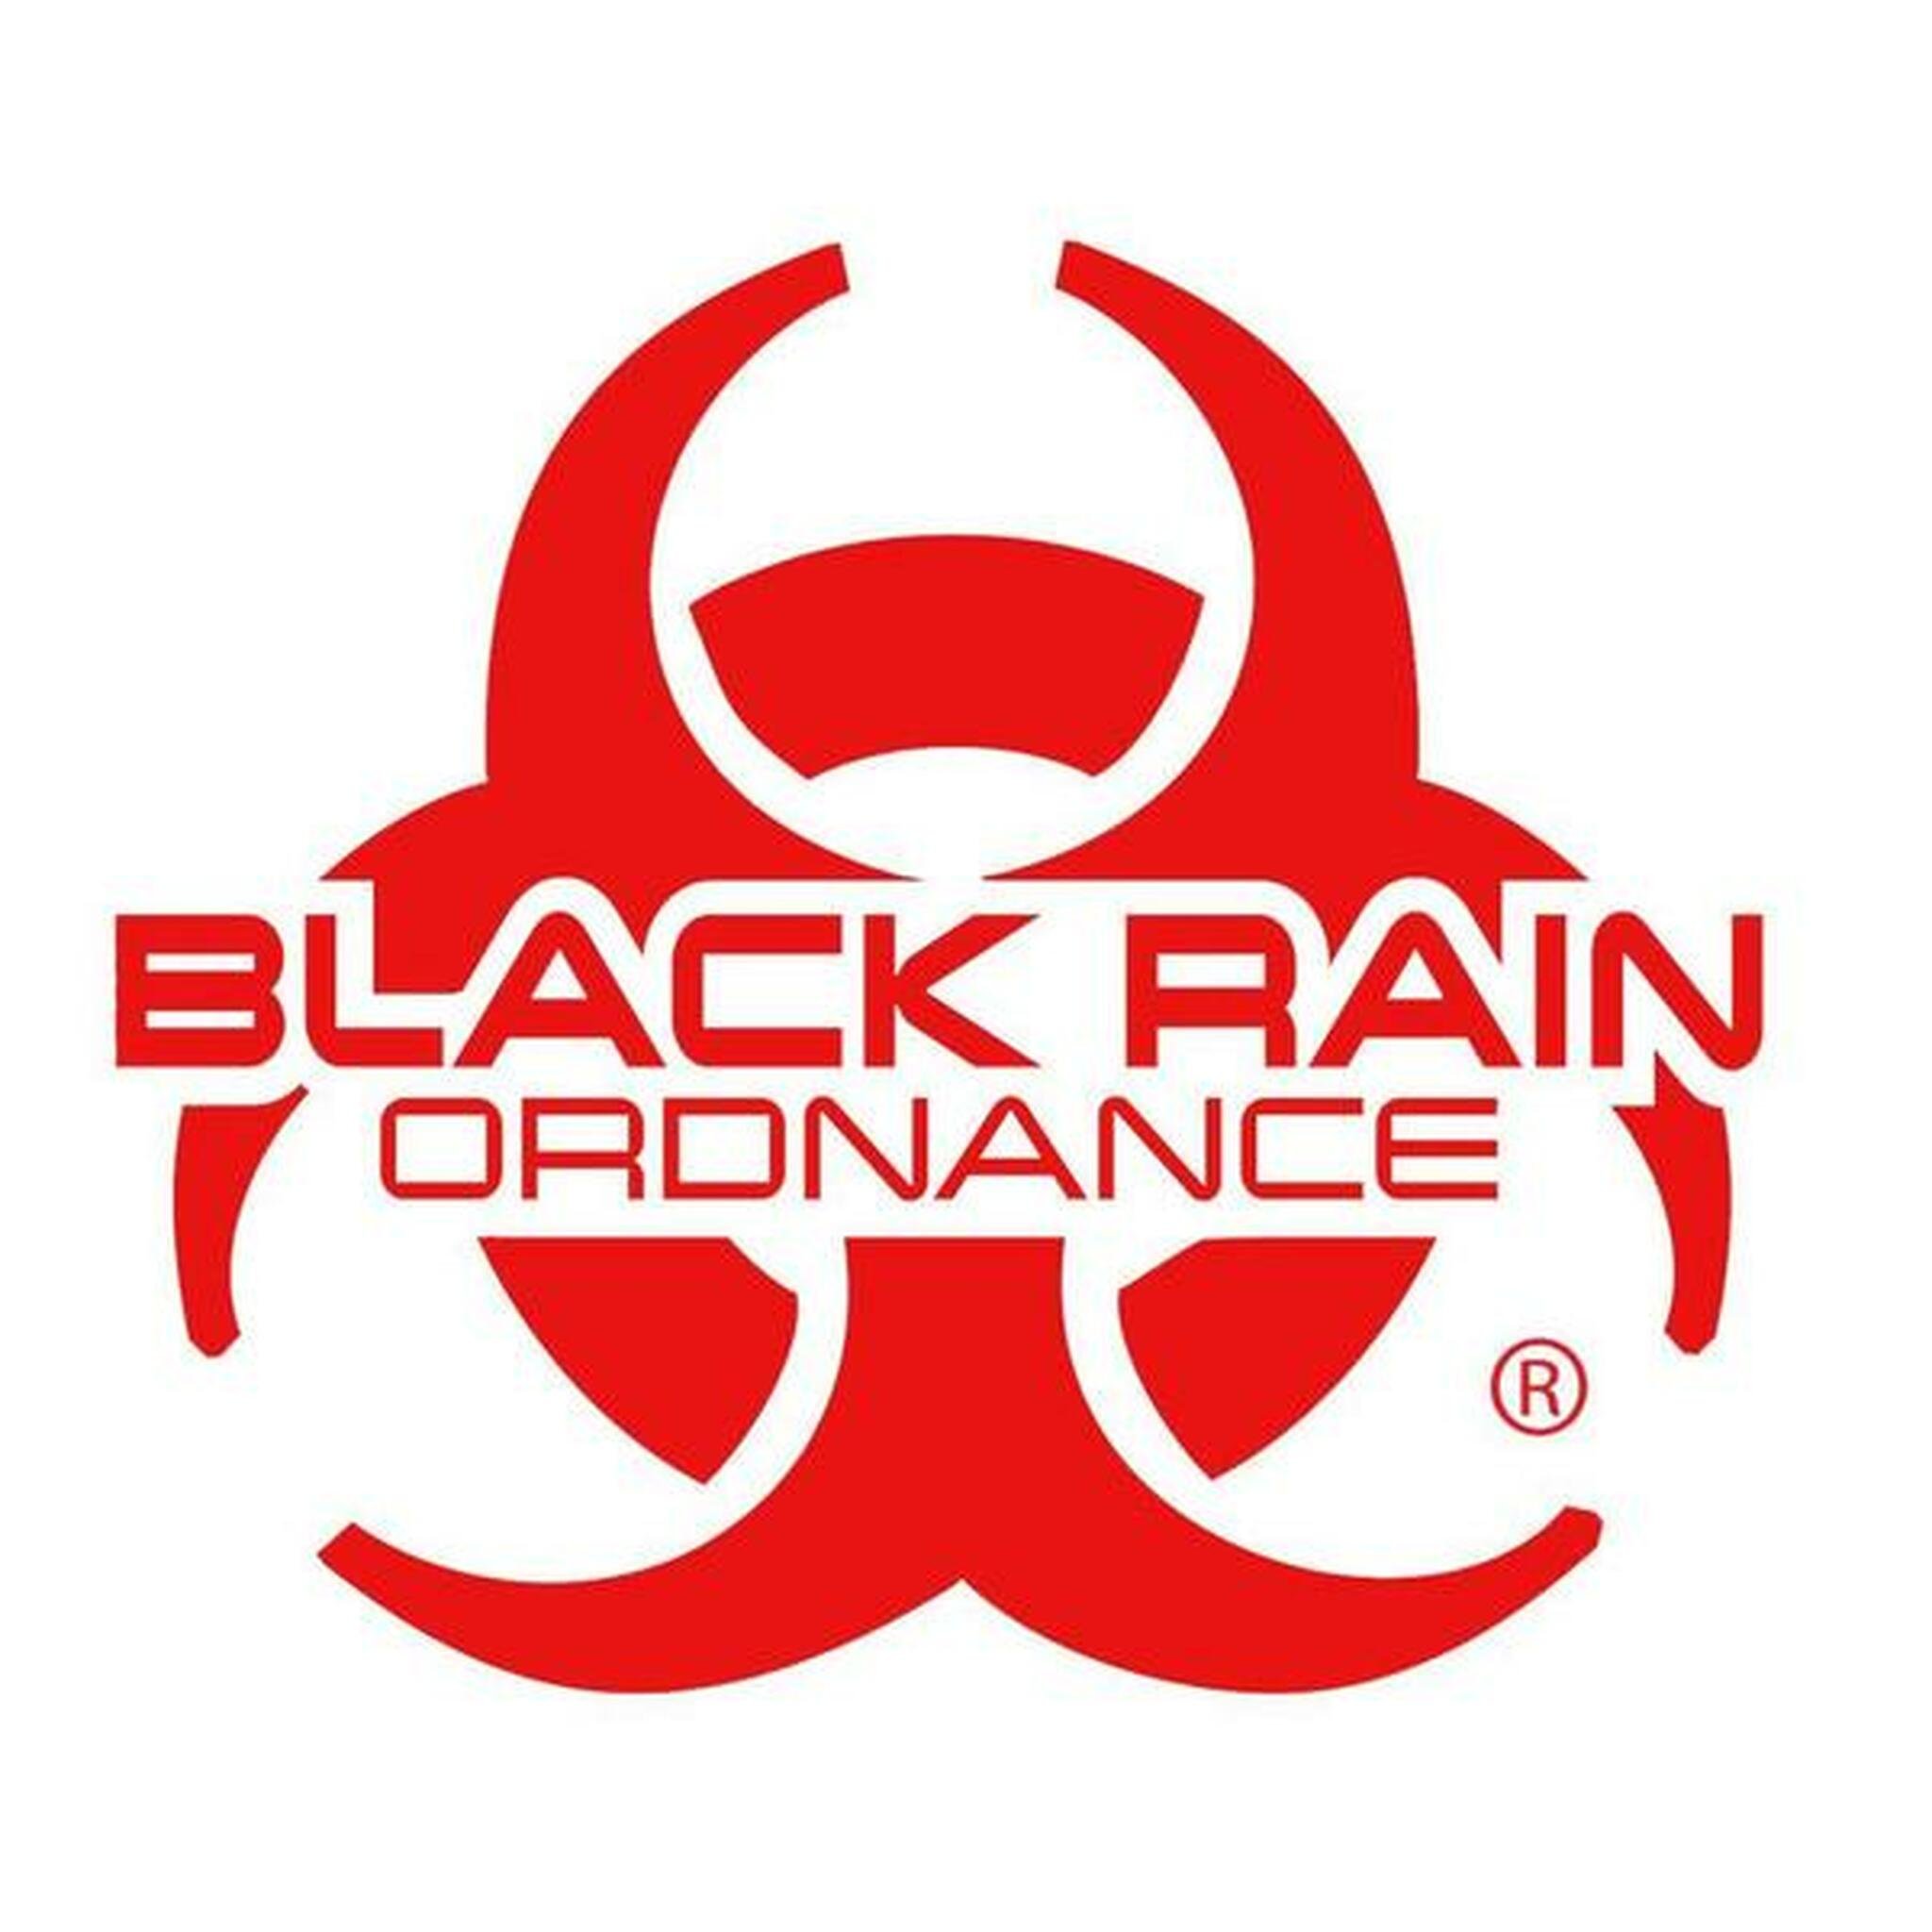 Black_Rain_Ordnance_Red_Logo__53504.1478196207.jpg